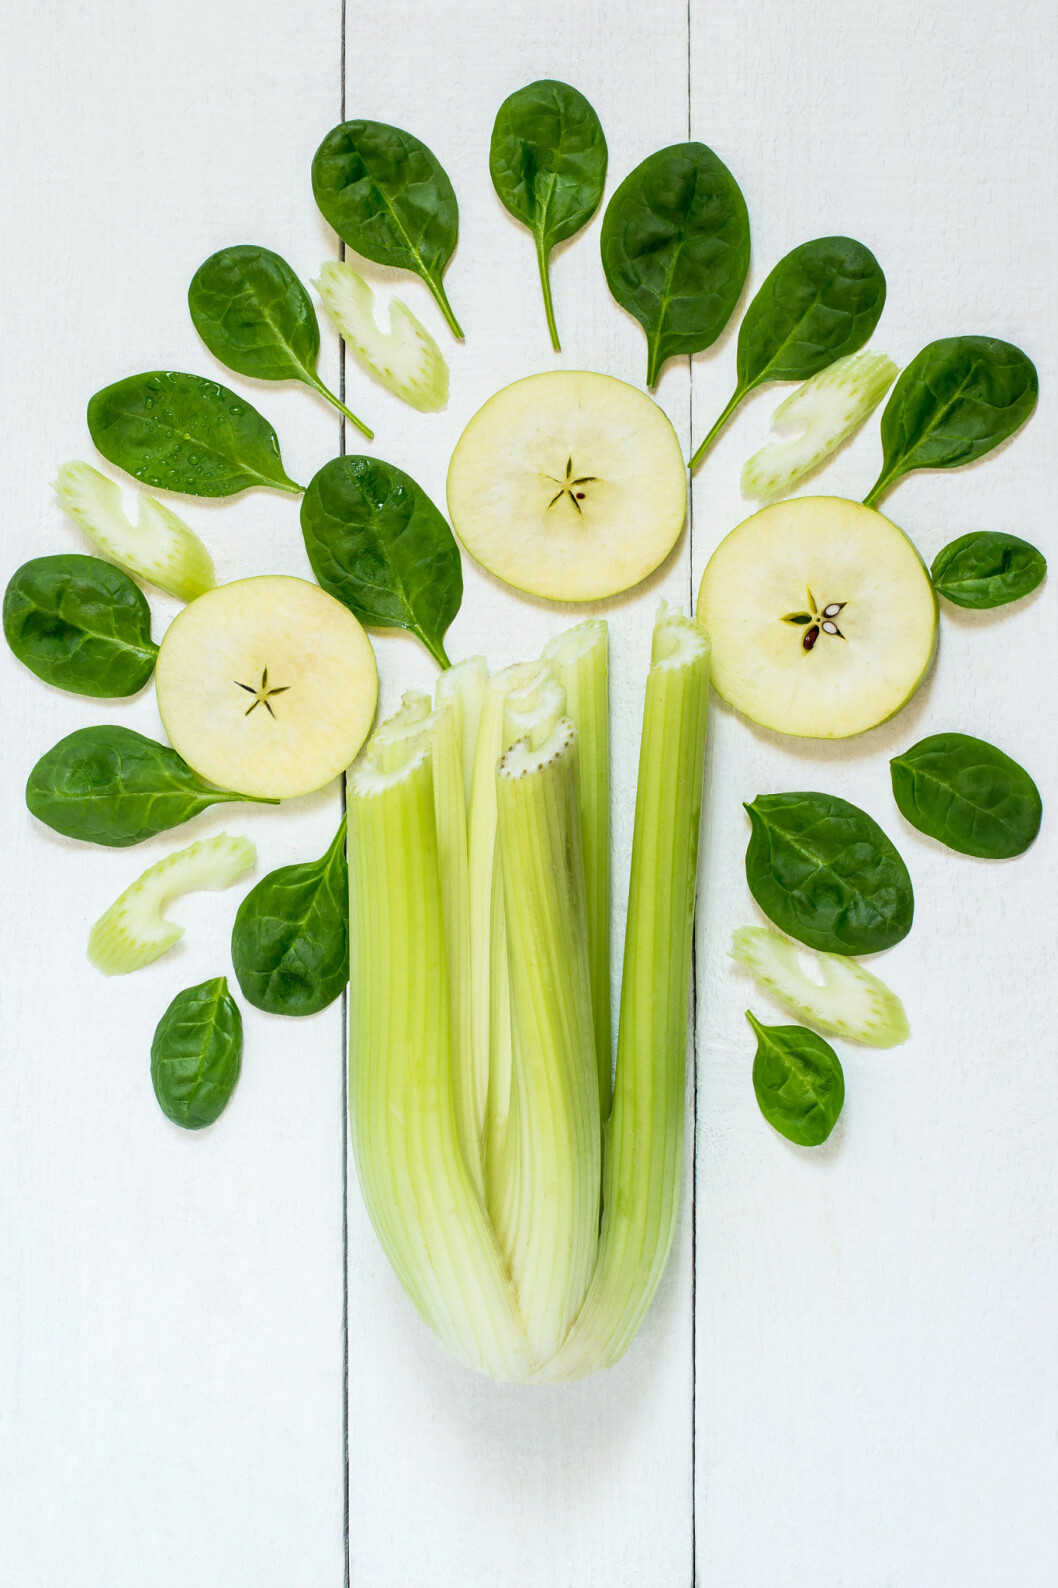 The ingredients to prepare vitamin green smoothie